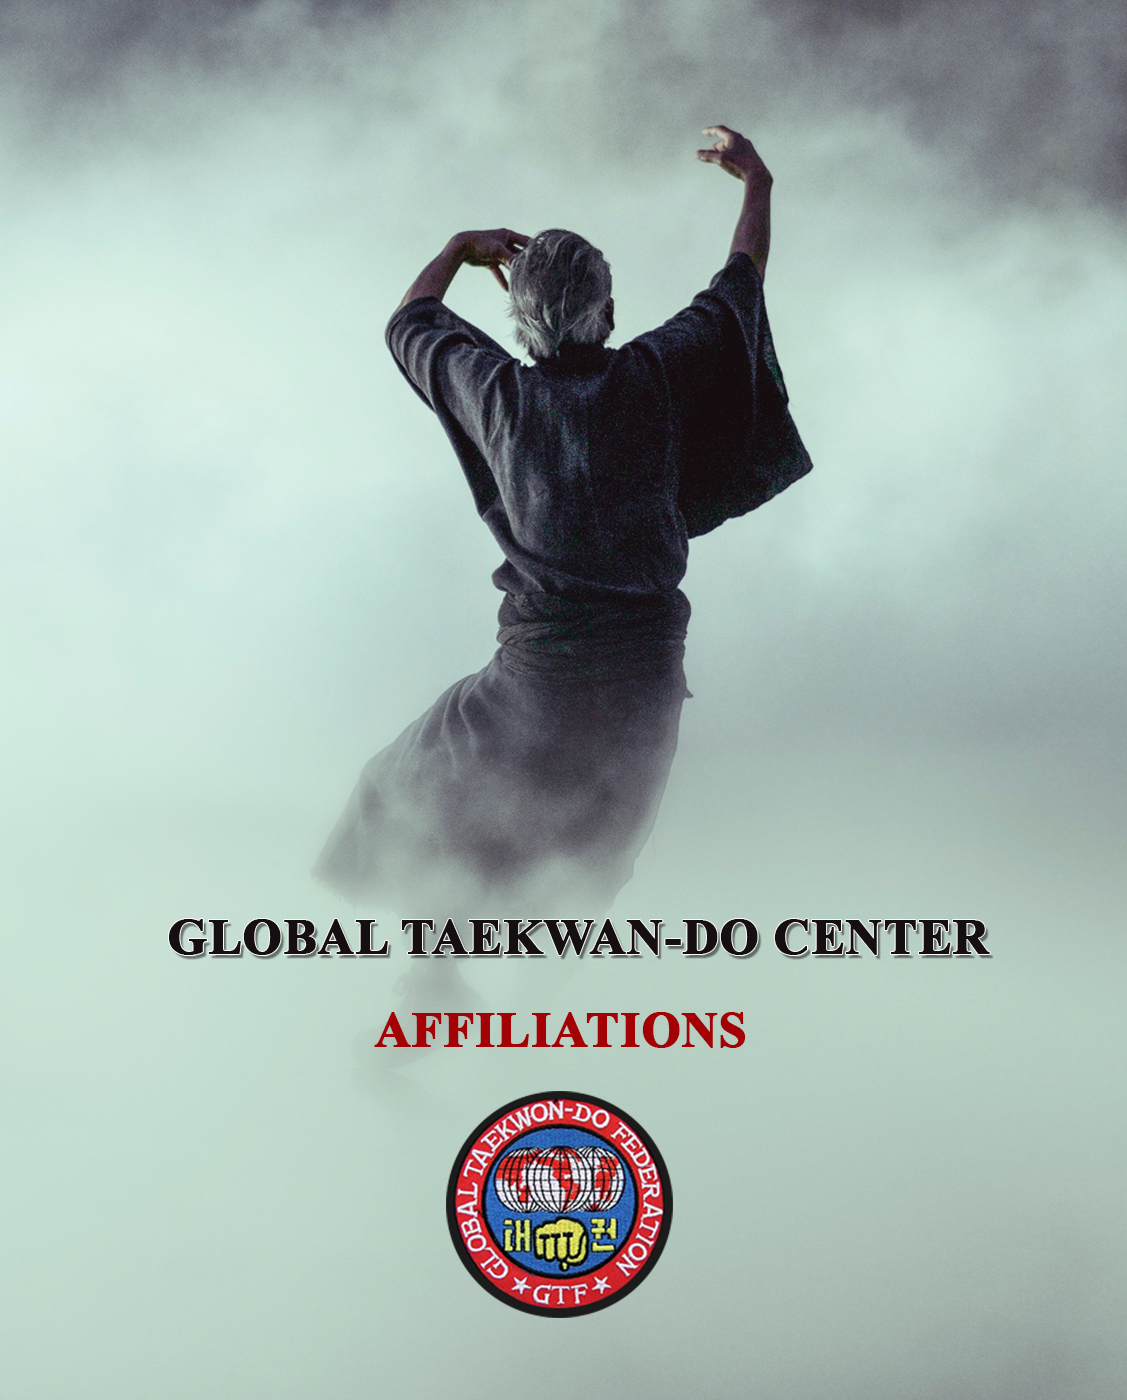 Global Taekwando Center training Classes